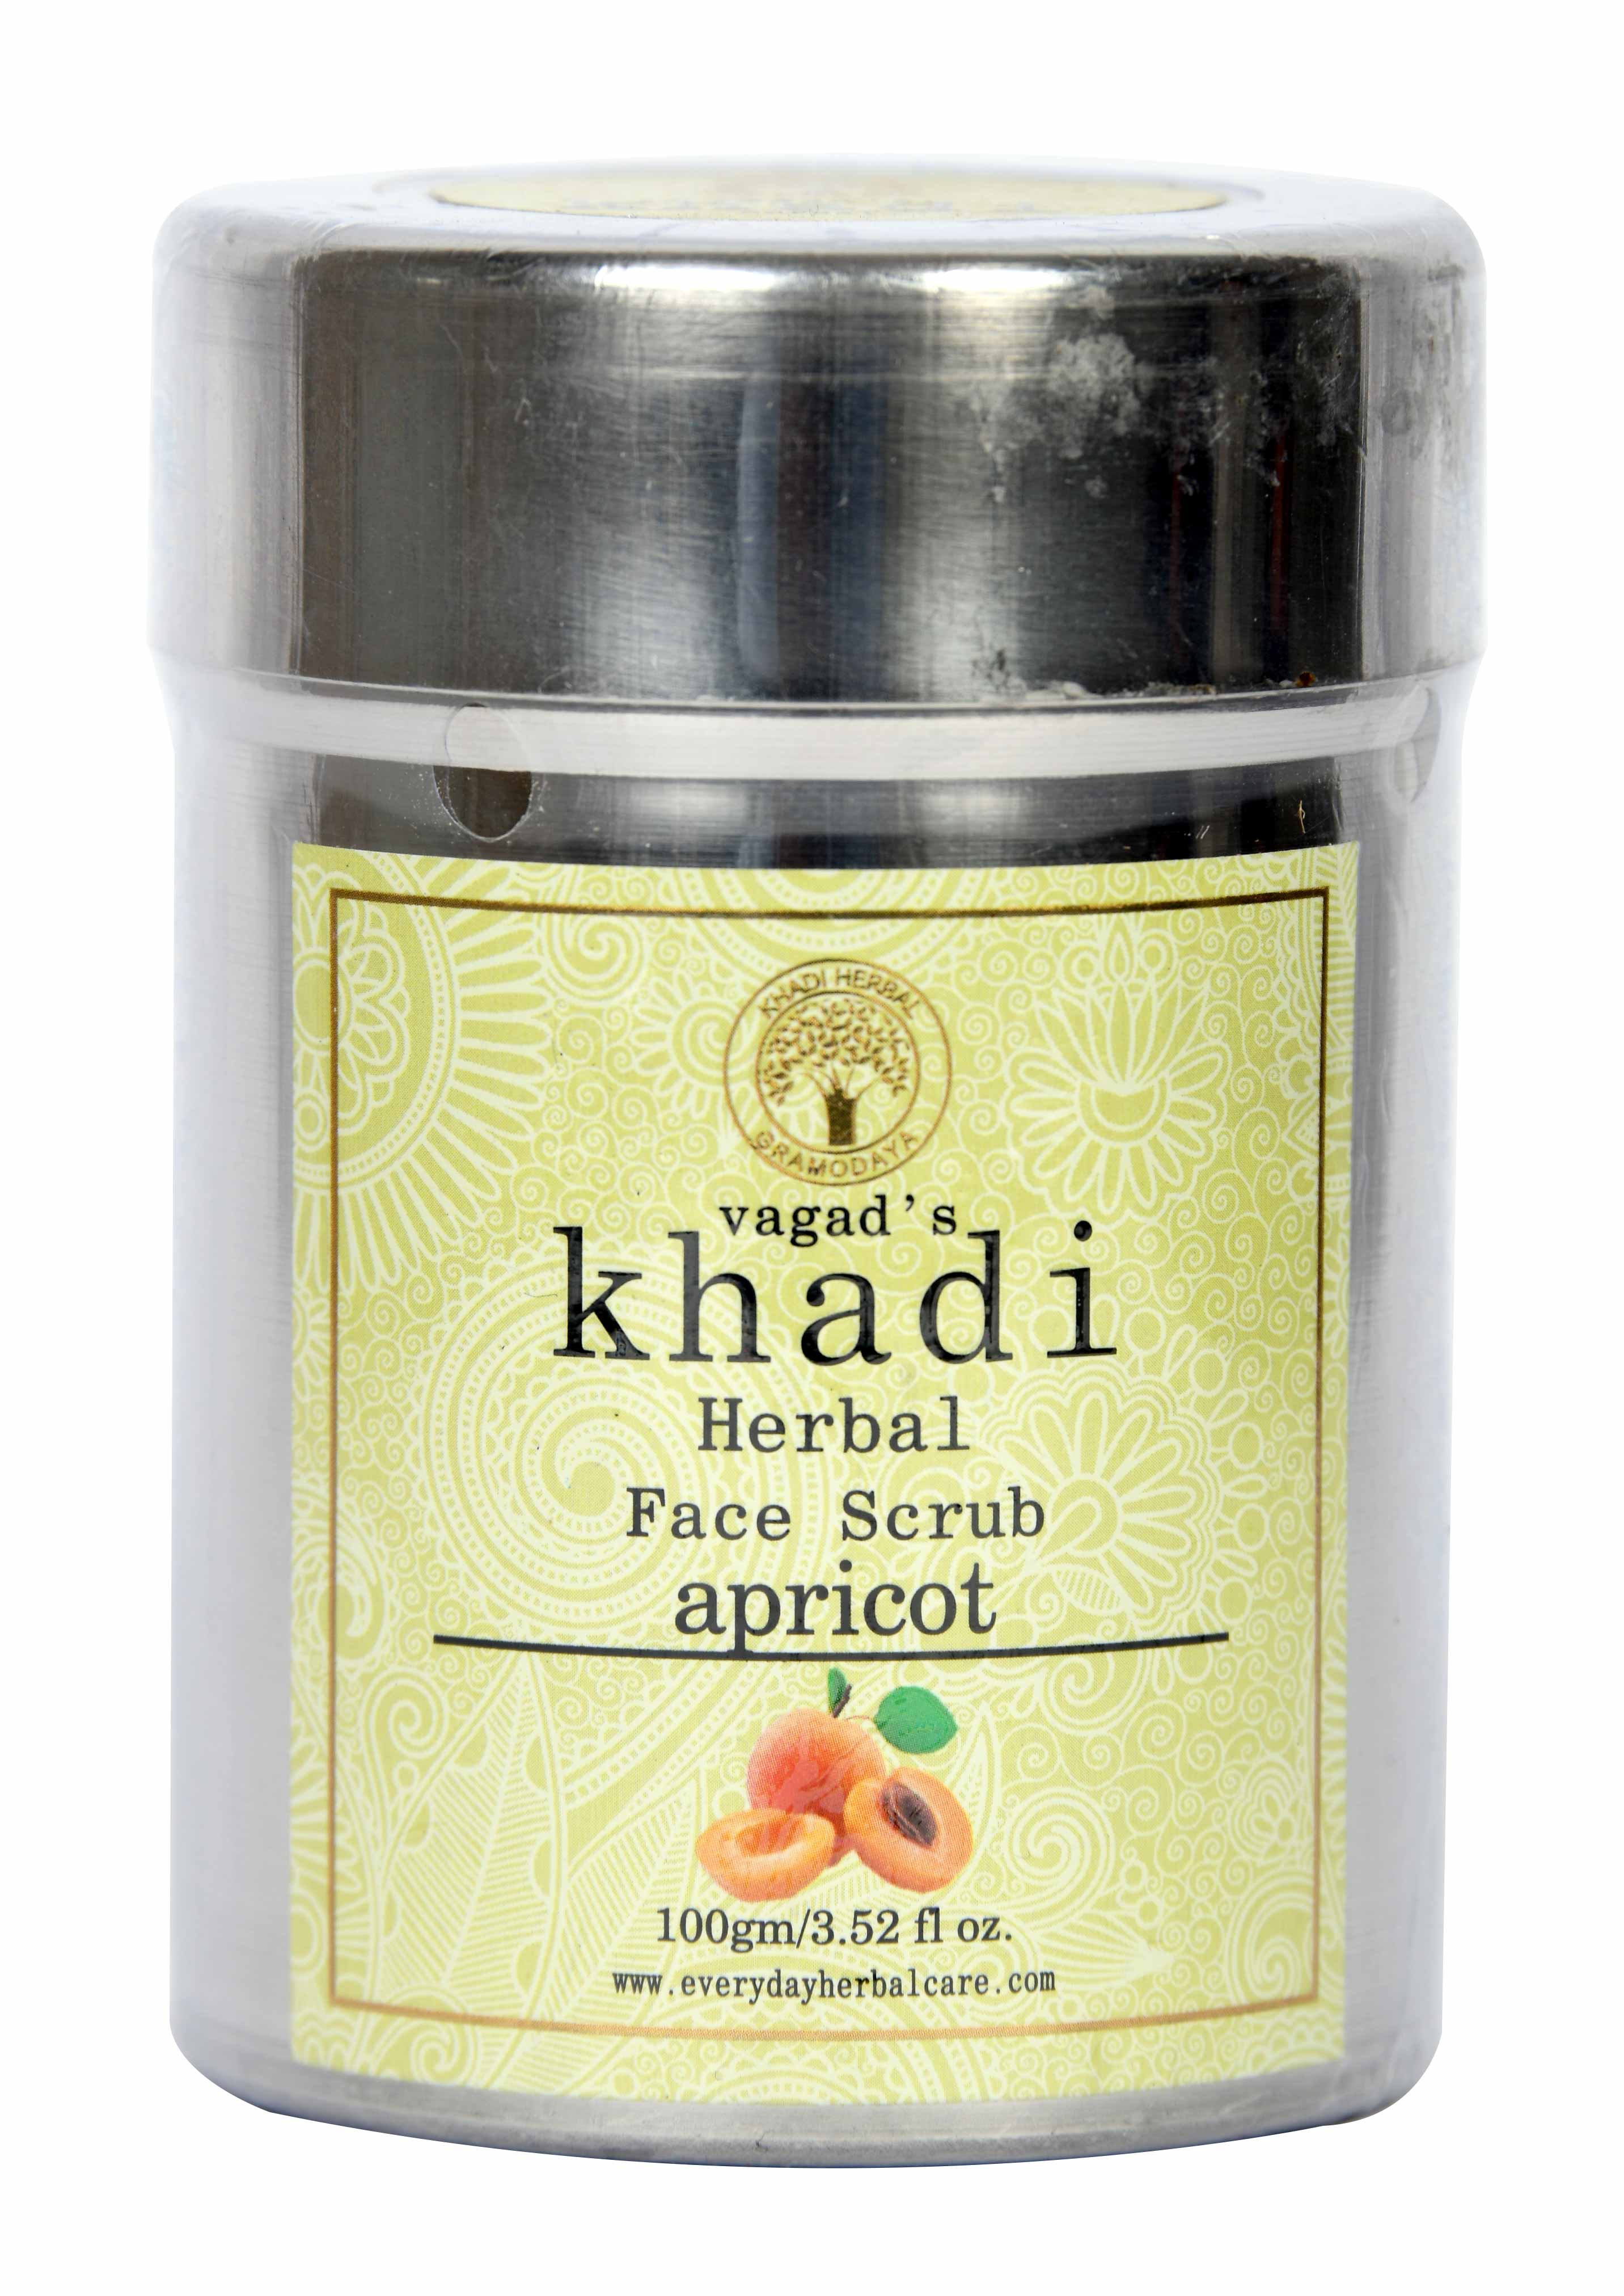 Vagad's Khadi Apricot Scrub